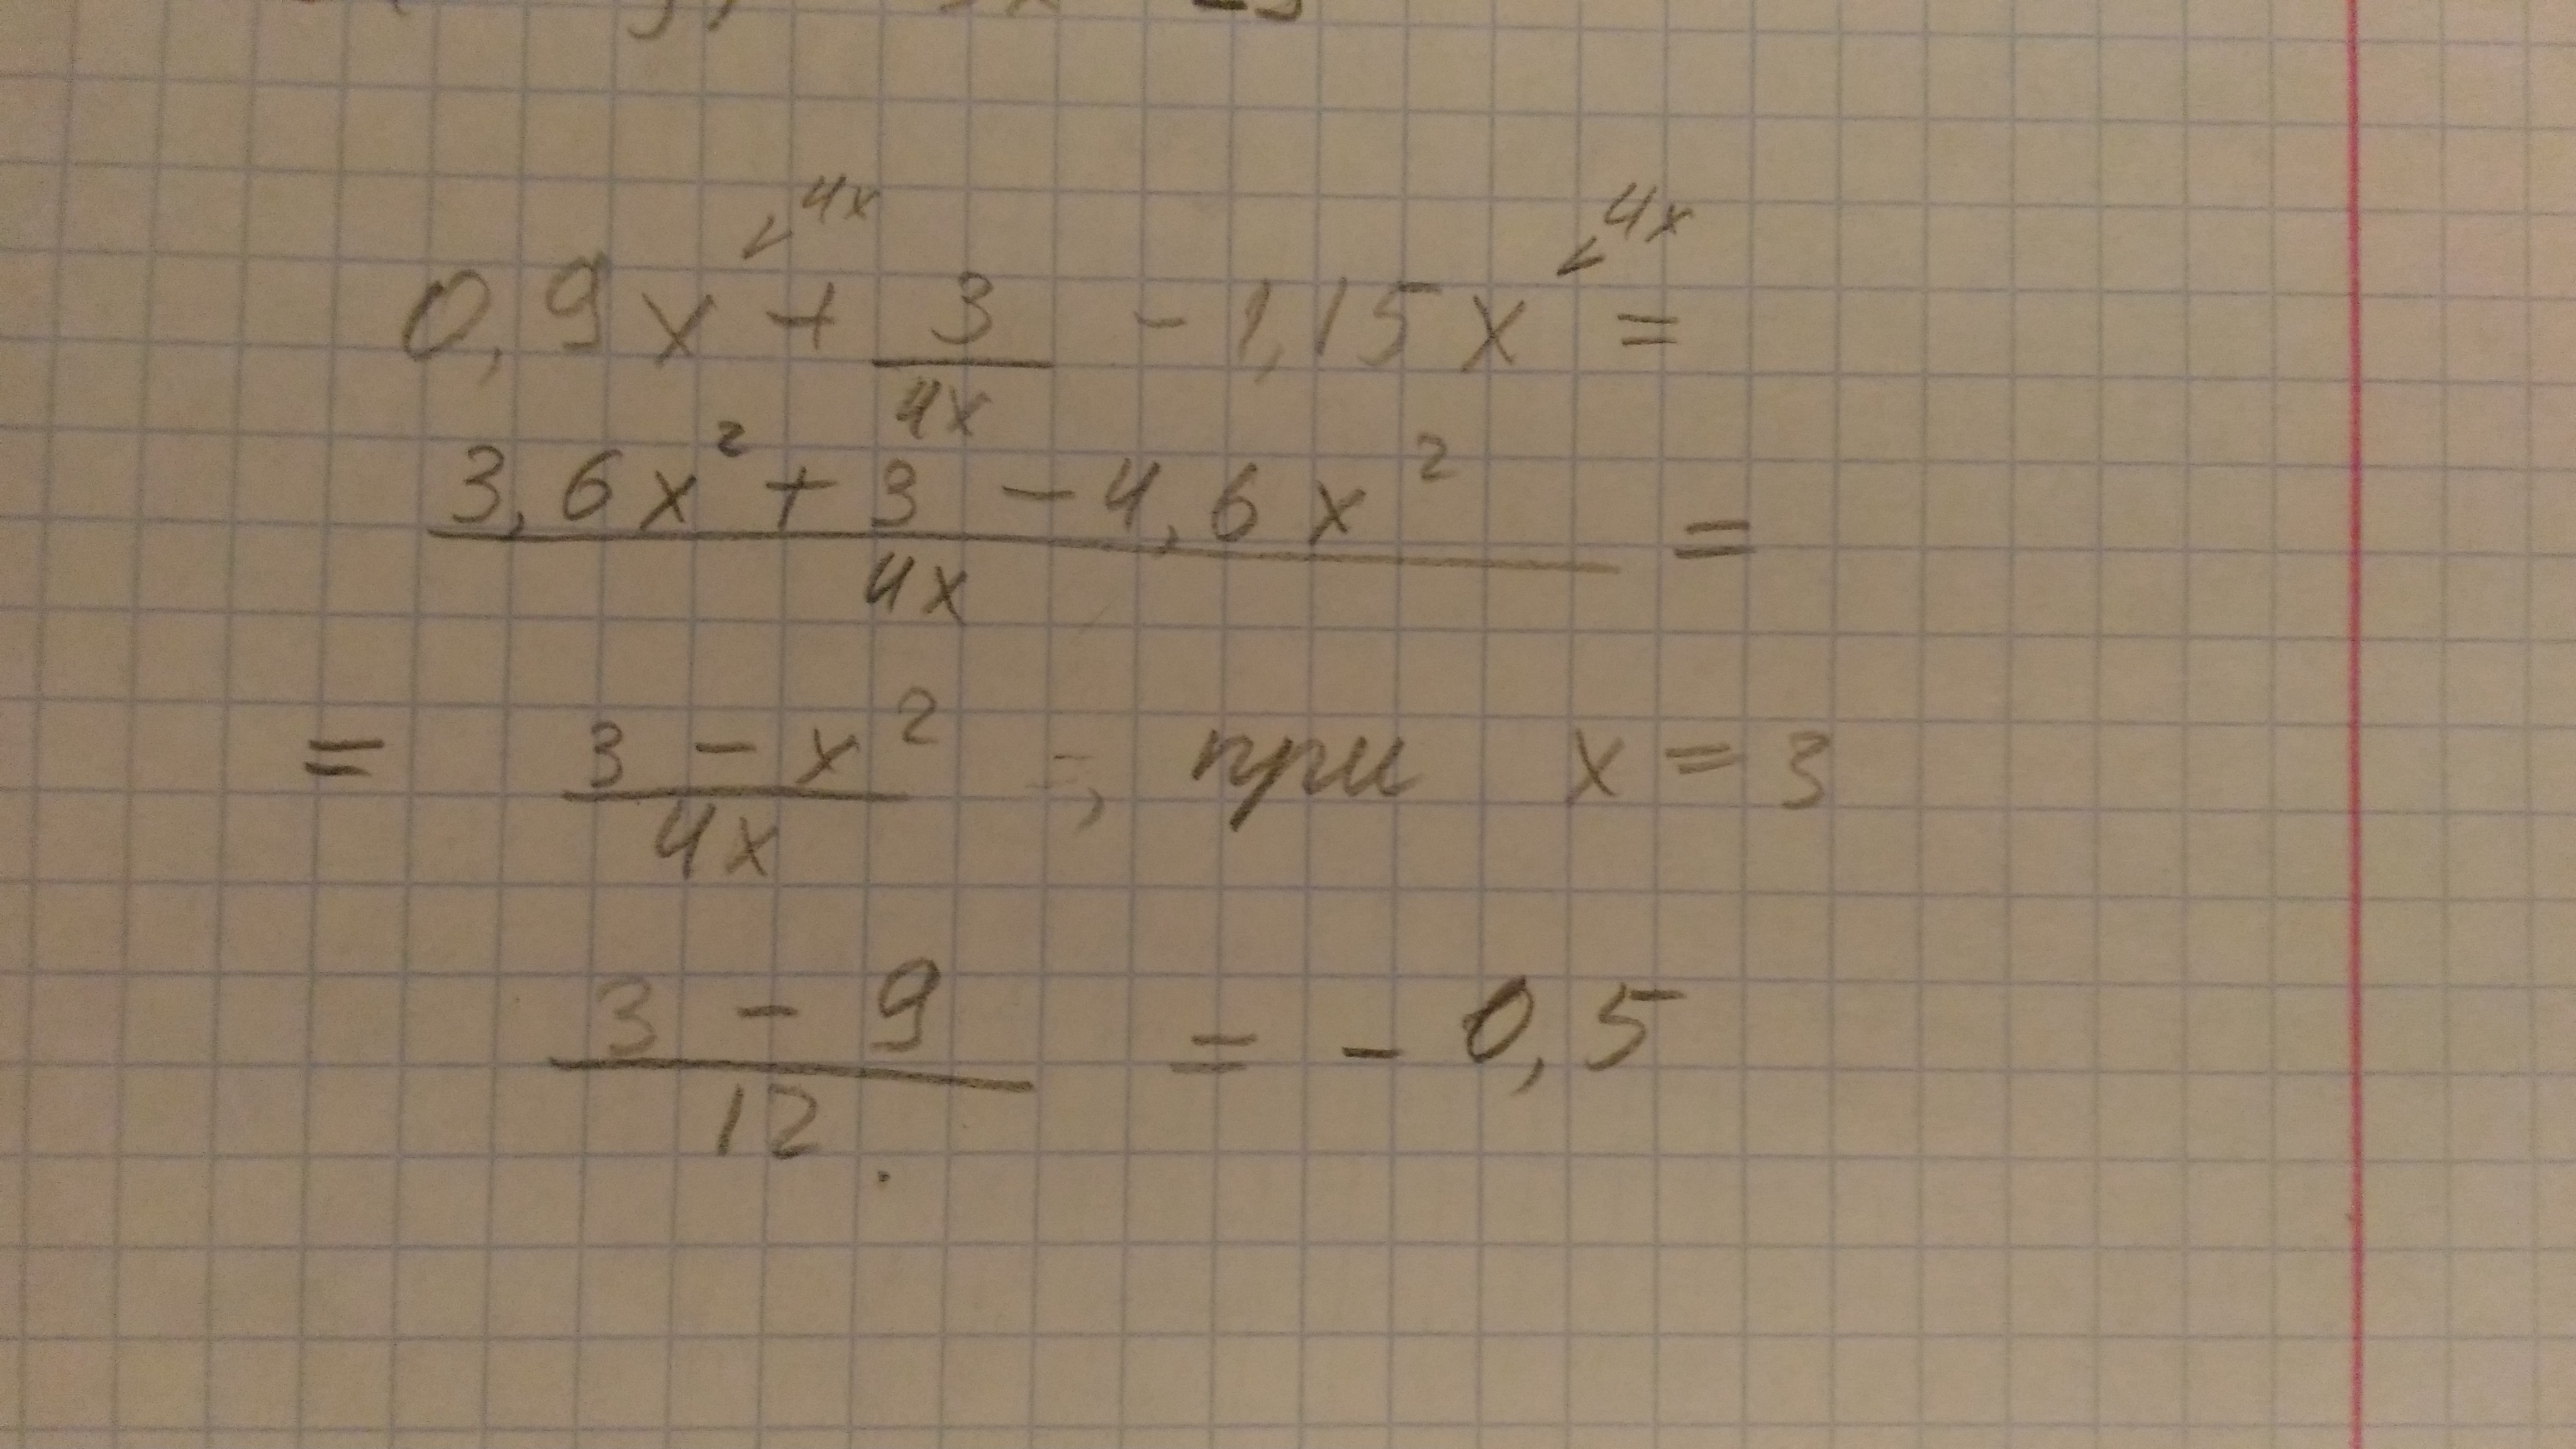 2x 3 x 1 9x 5 4x. |-4|+|1-3x| при x. 4 4 5 X X      при x  3. 3x-|4x+15| при x=-8. X3-15x+80.